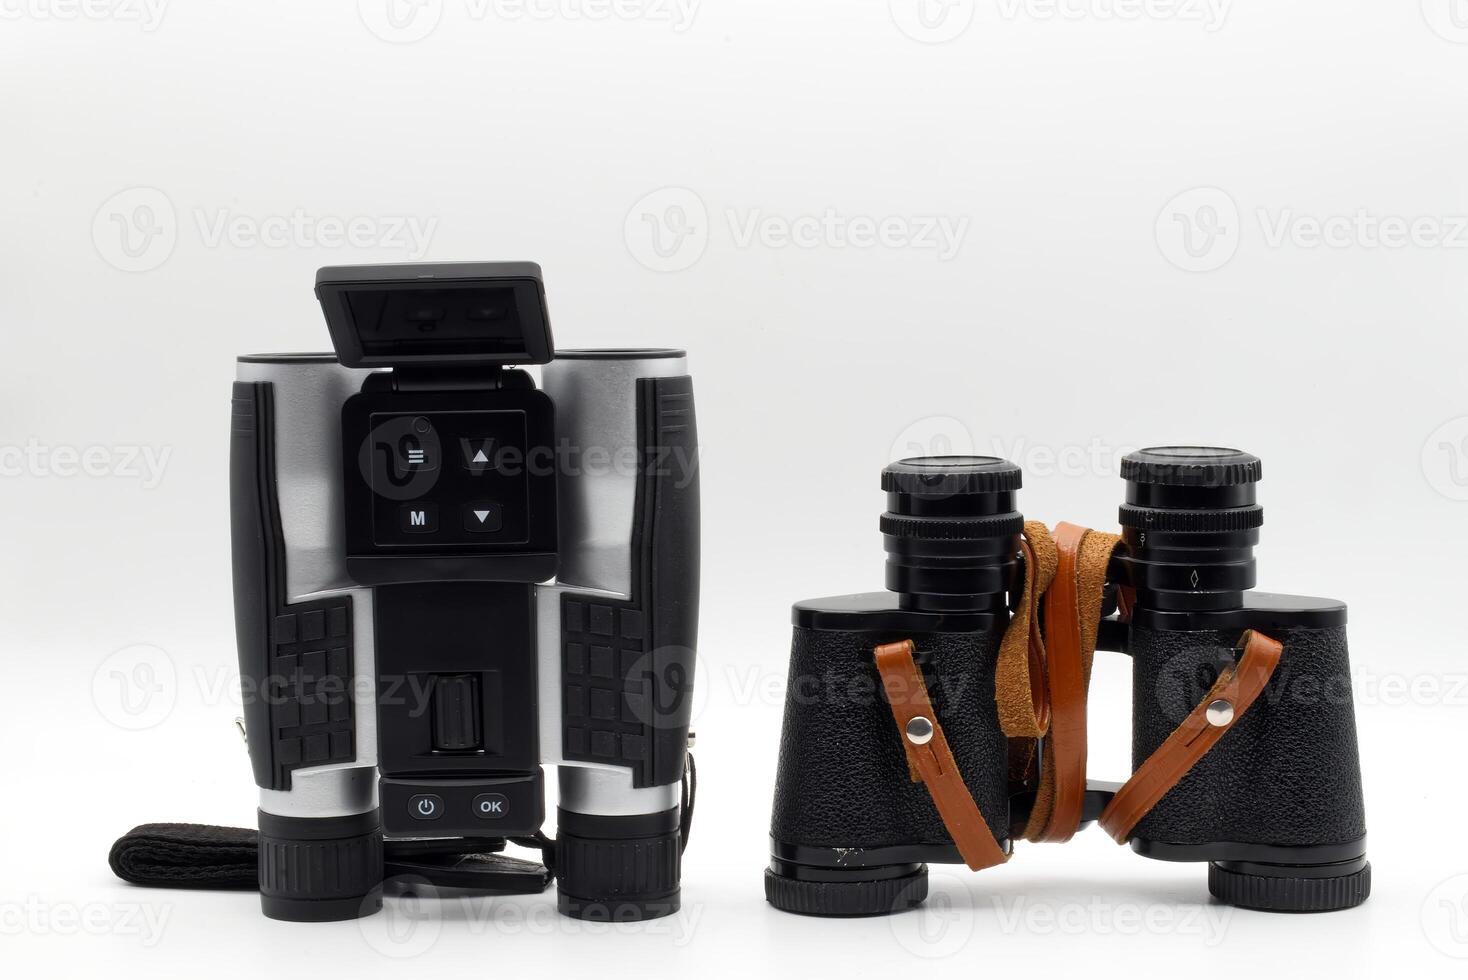 Modern binoculars with digital screen and vintage binoculars. Vintage binoculars Vs modern binoculars. photo